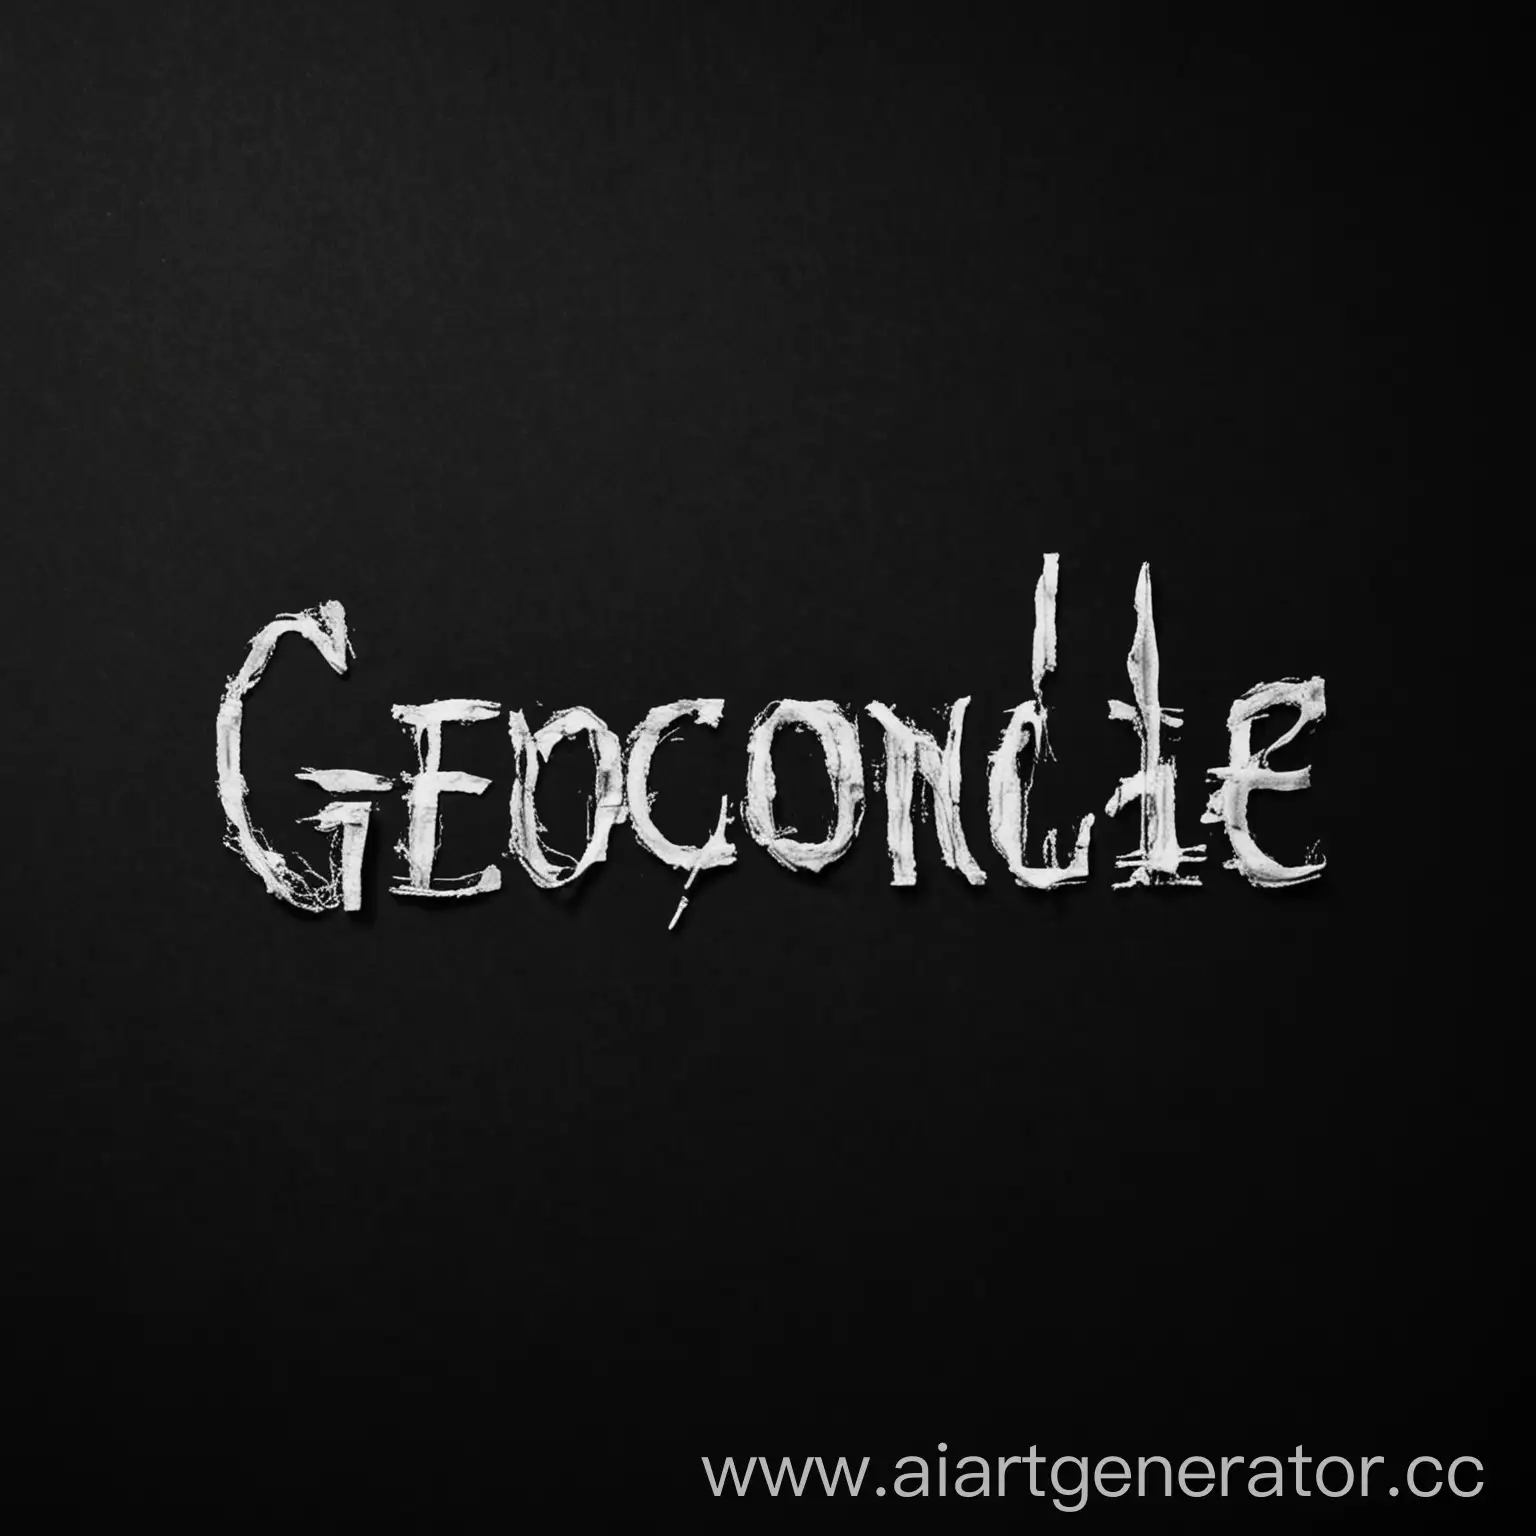 Dark-Black-Background-with-Genocide-Text